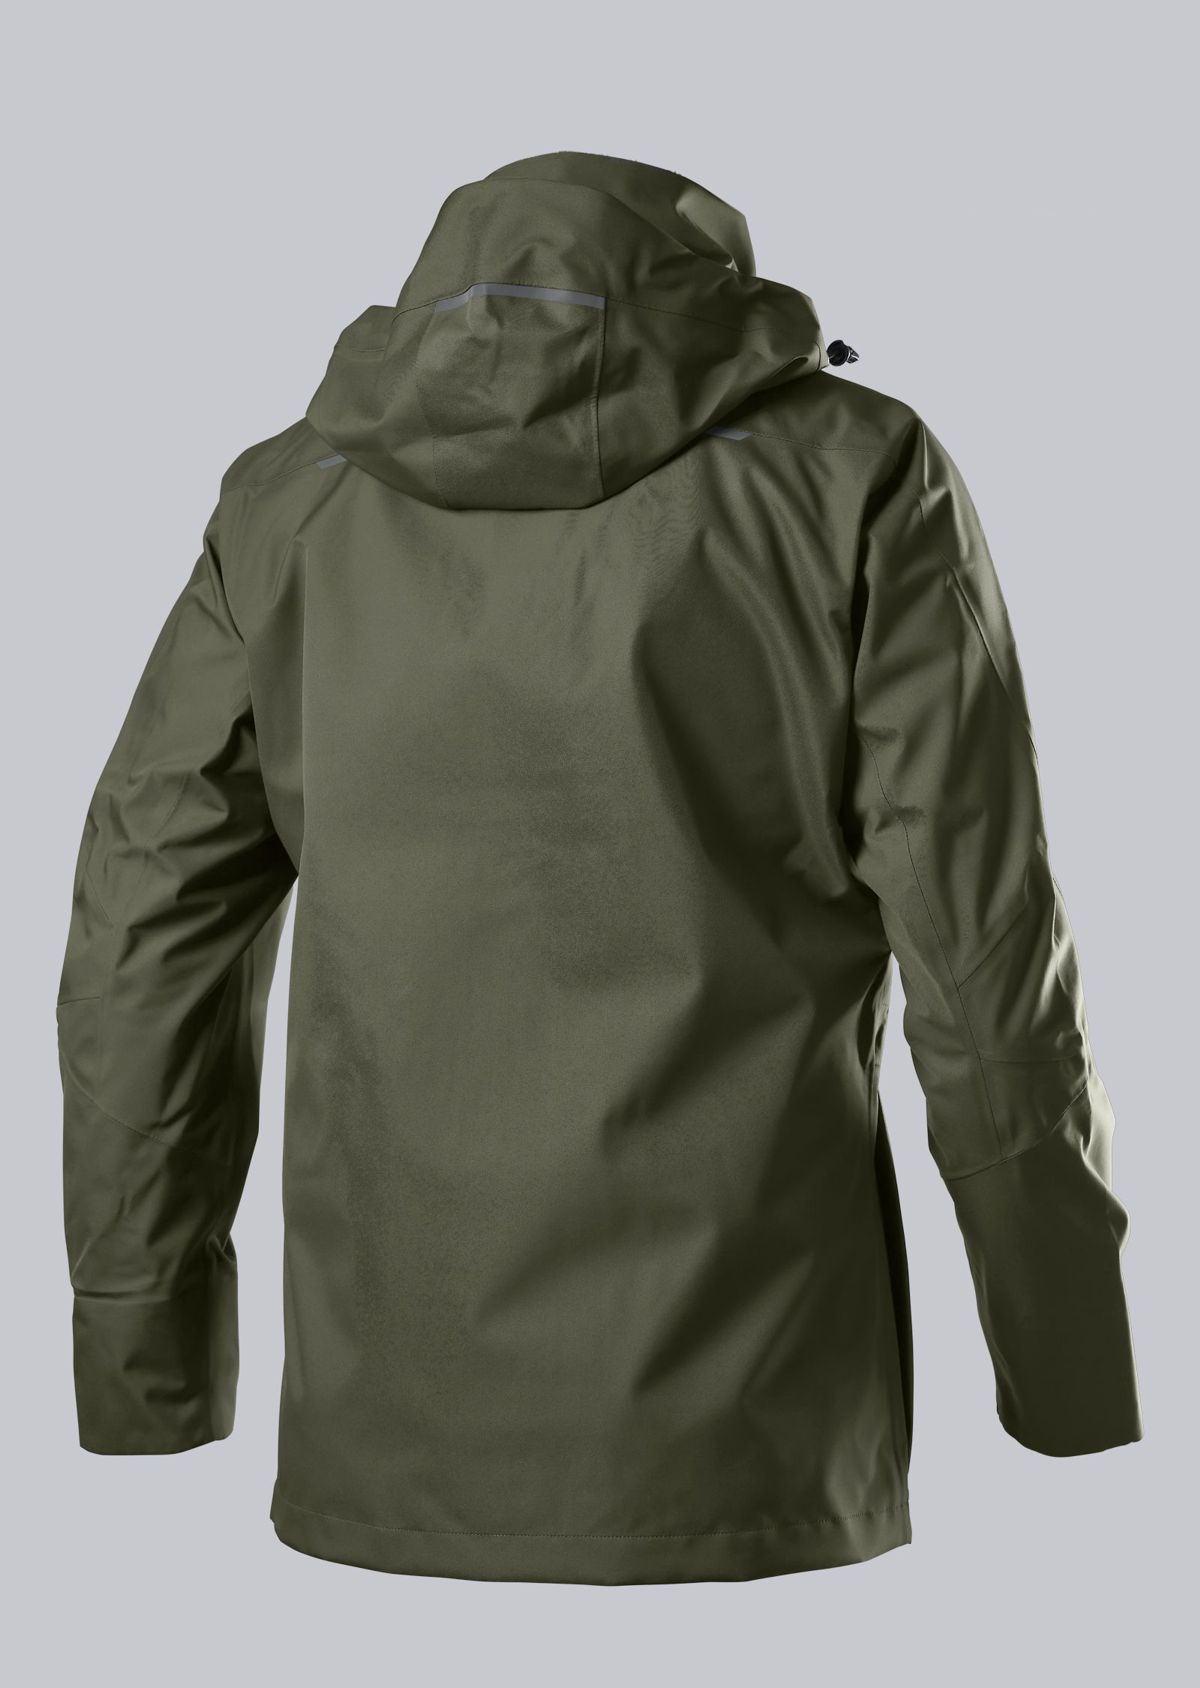 BP® Lightweight weatherproof work jacket